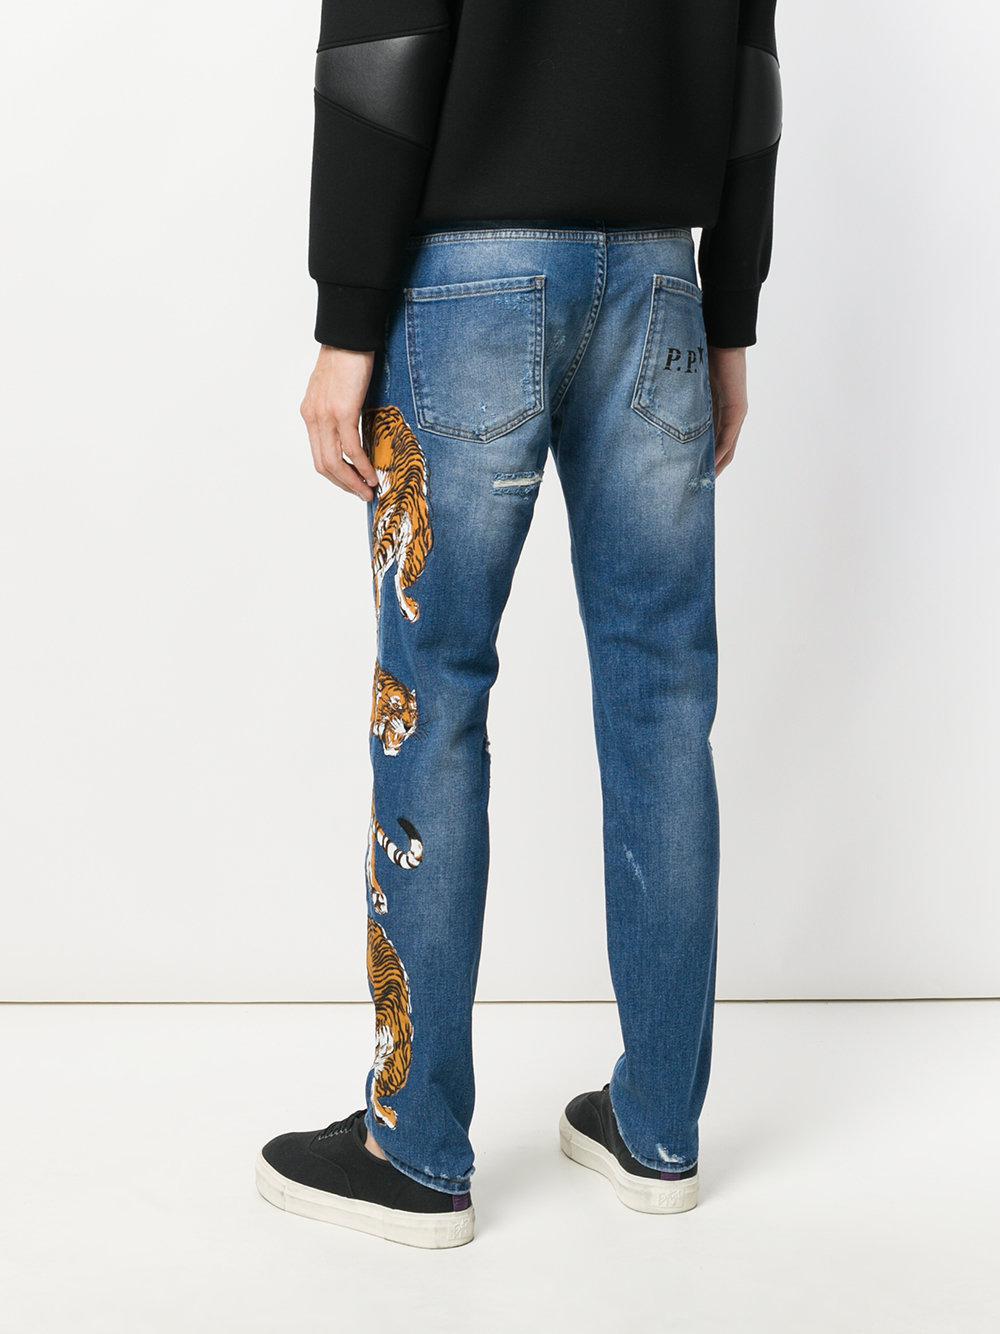 Philipp Plein Denim Straight Leg Tiger Jeans in Blue for Men - Lyst